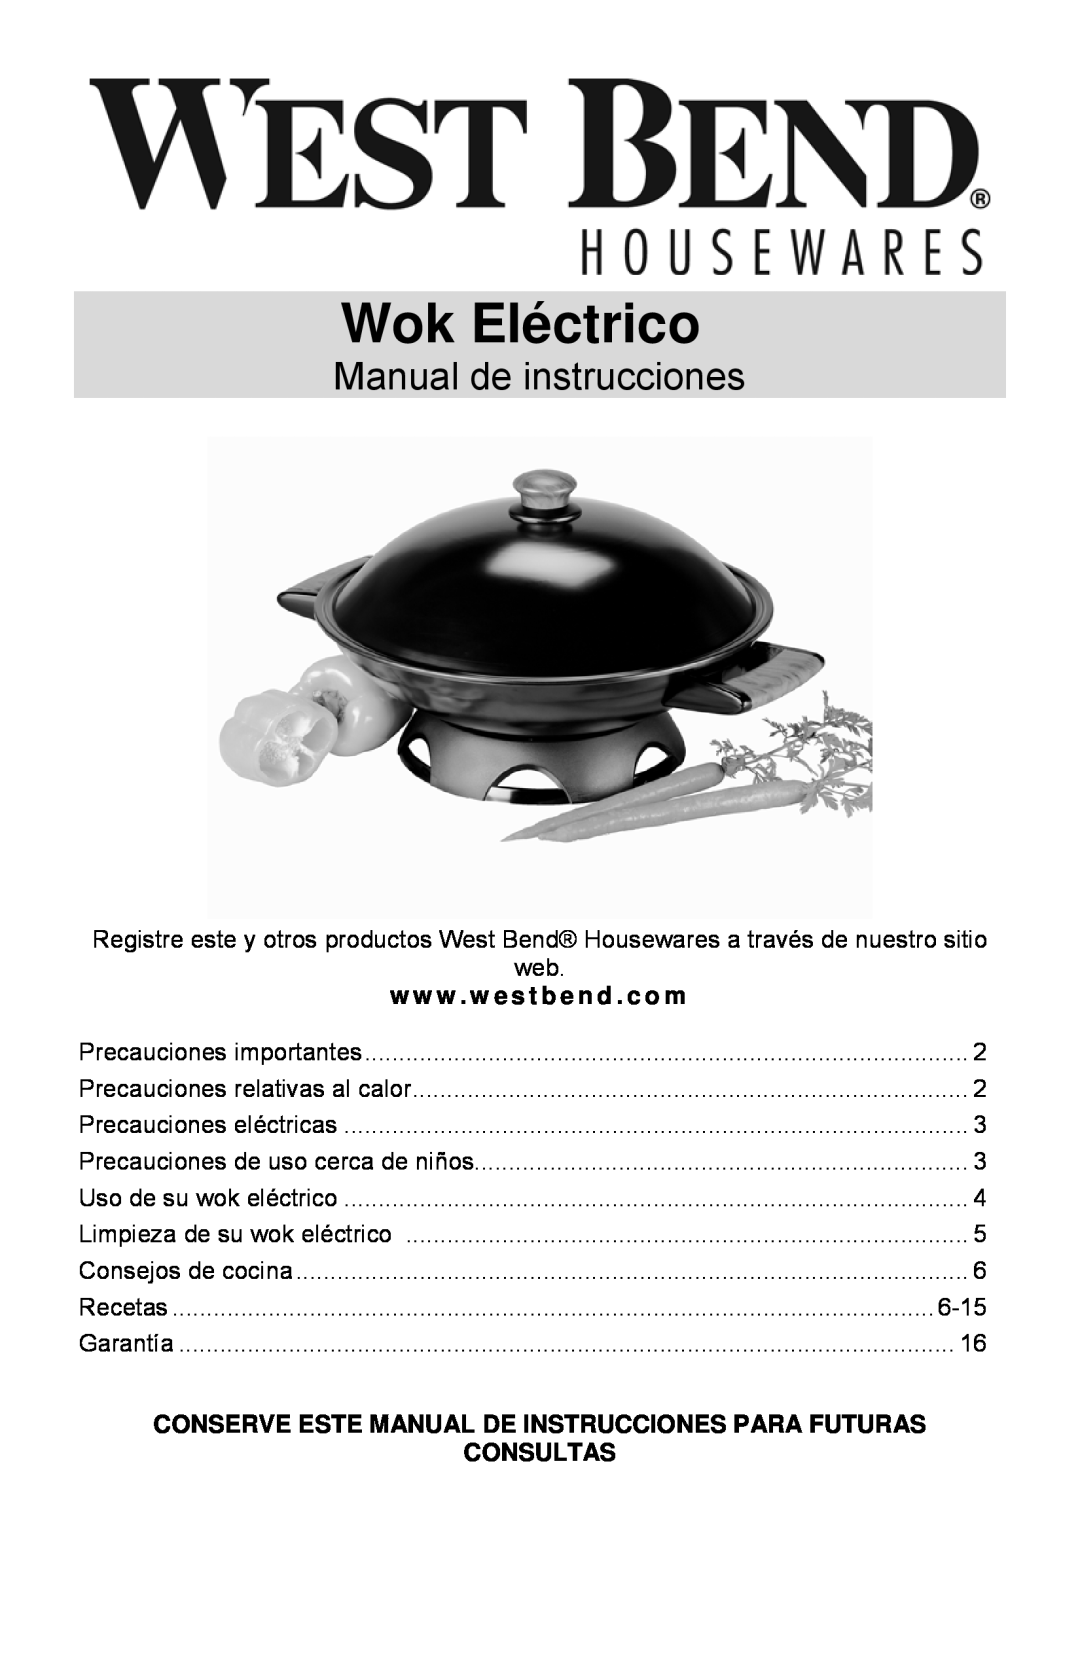 West Bend Housewares Electric Wok instruction manual Wok Eléctrico, Manual de instrucciones 